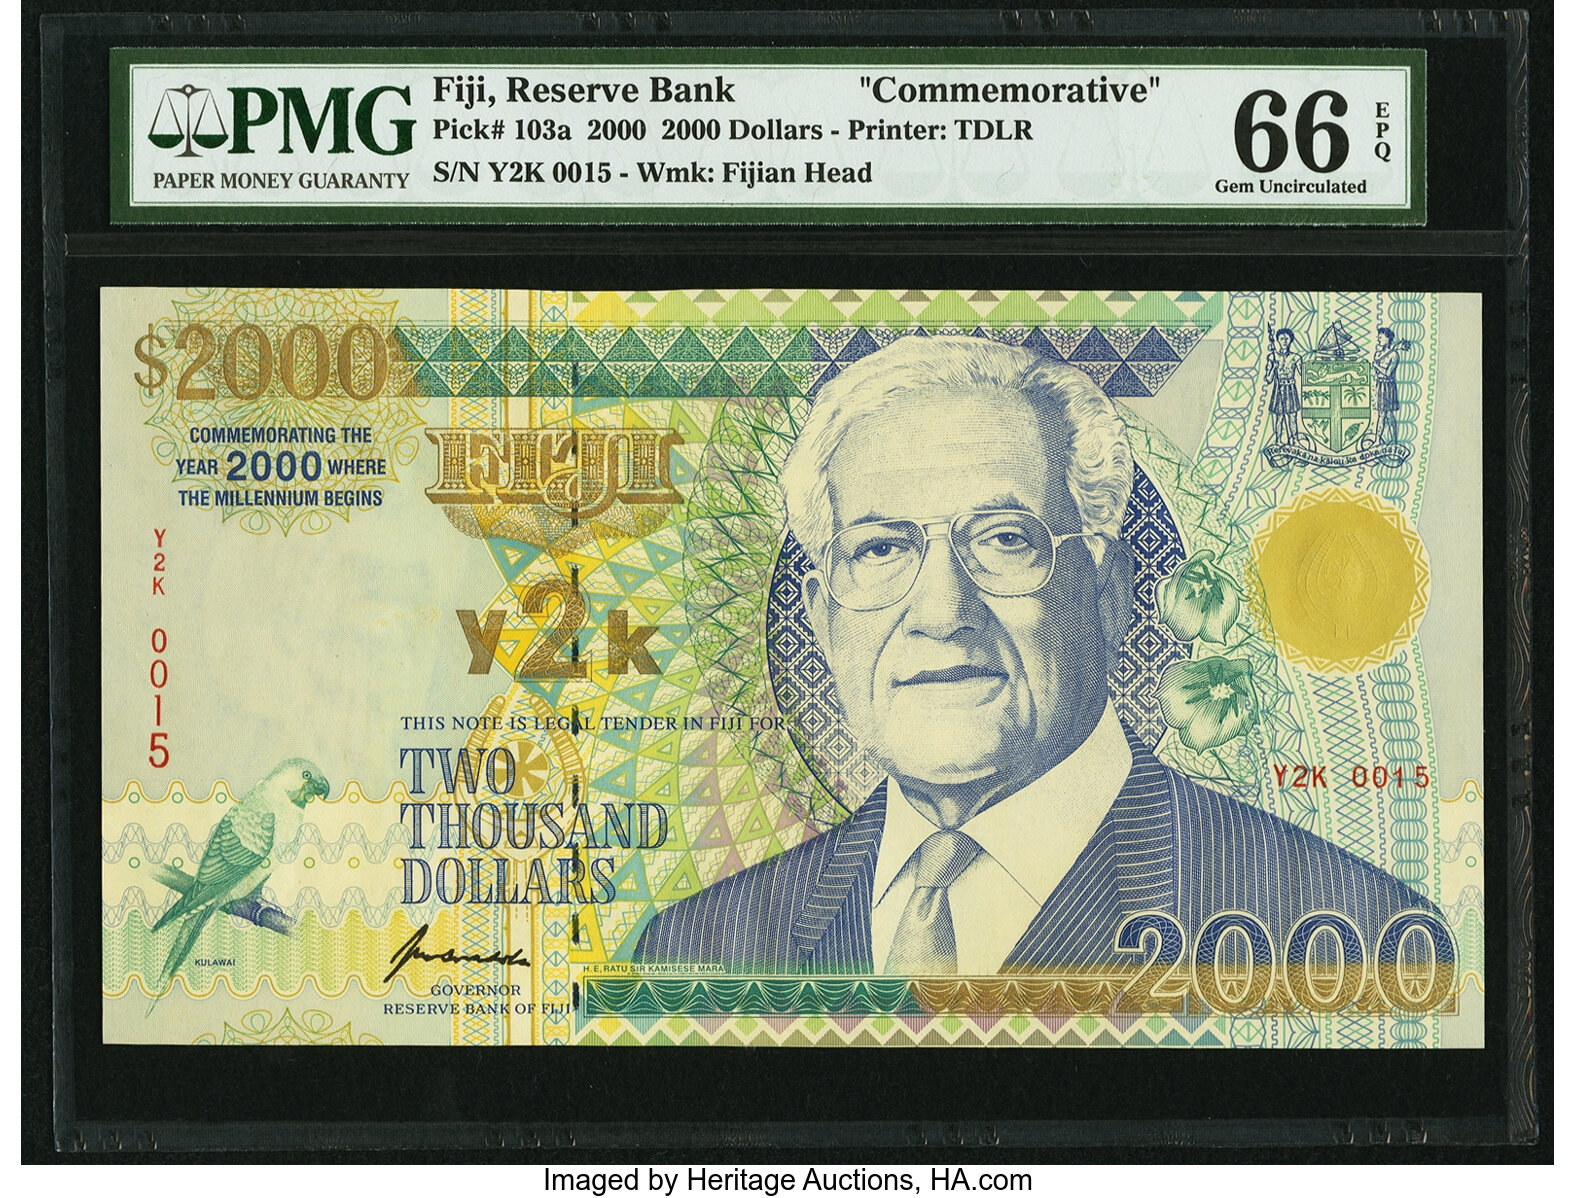 Fiji Reserve Bank of Fiji 2000 Dollars 2000 Pick 103a..  World